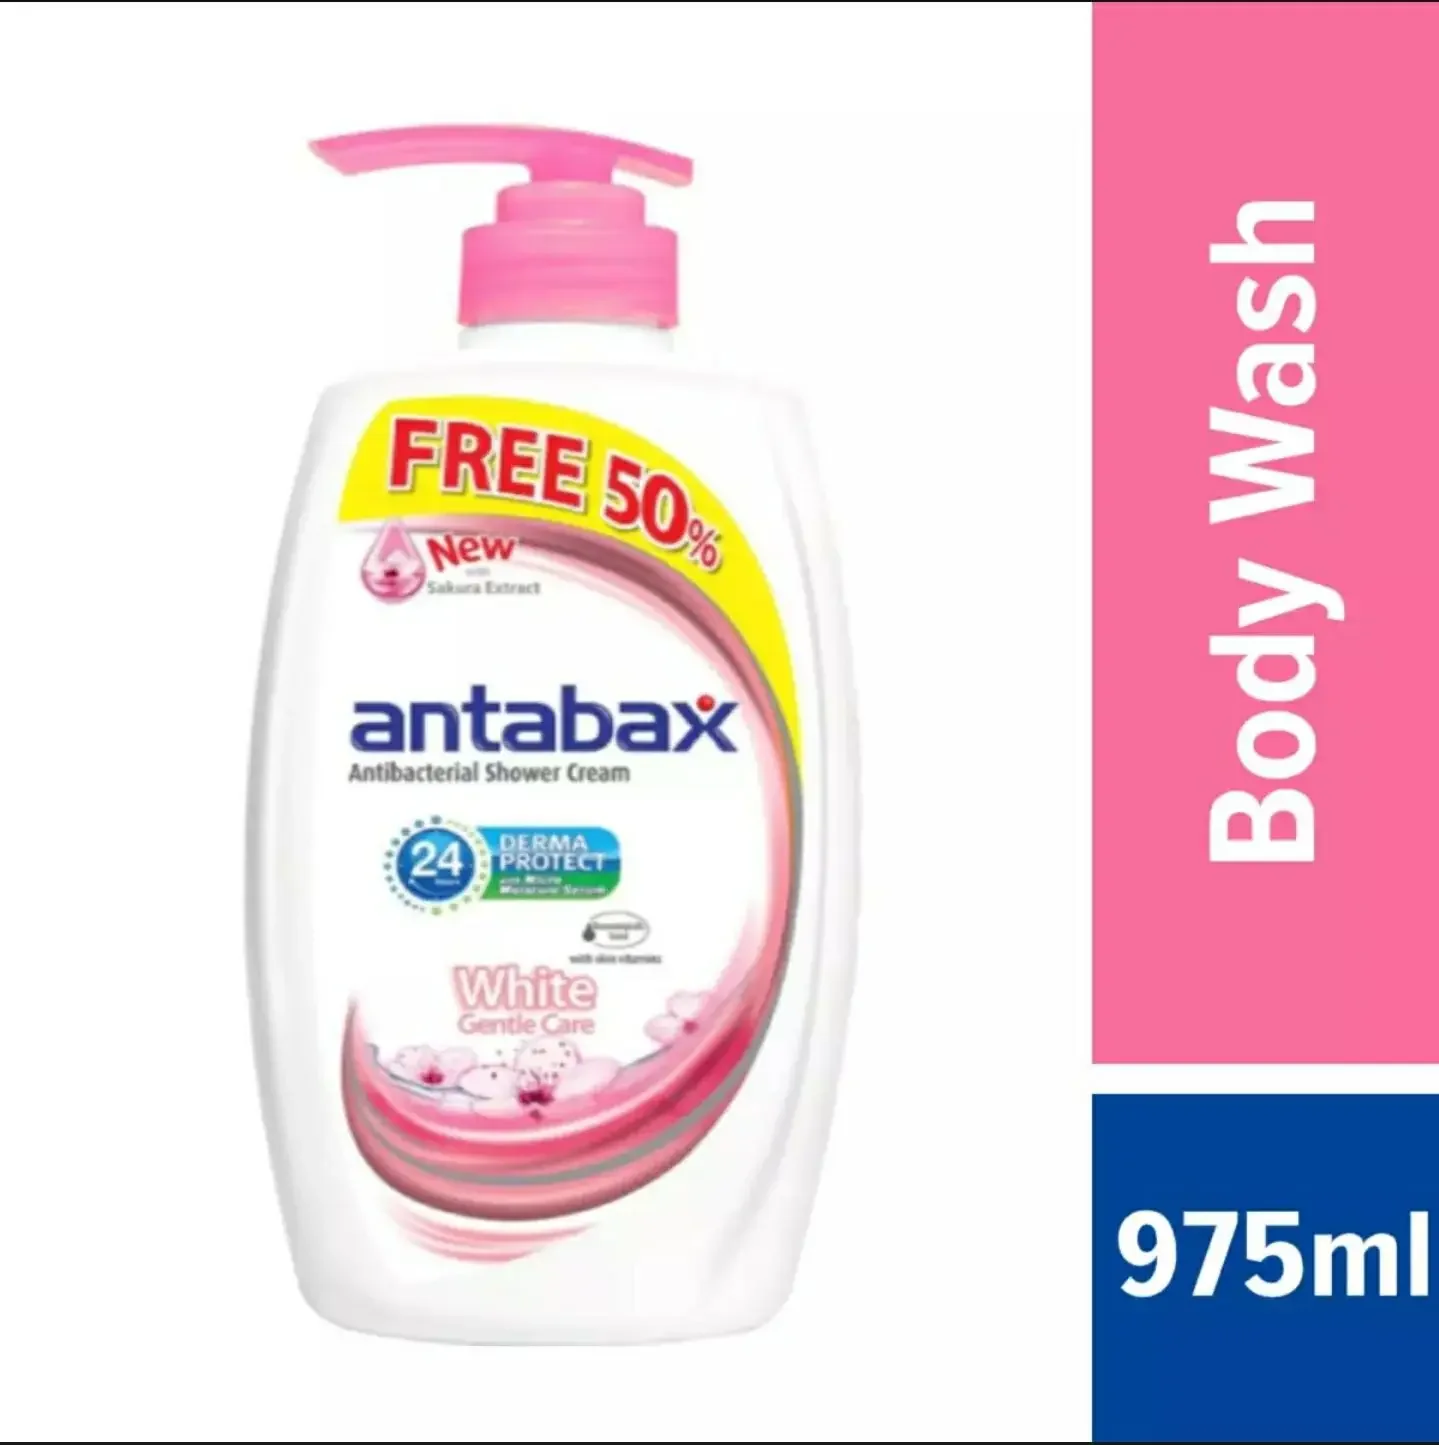 Antabax Gentle Care Antibacterial Shower Cream 650ml + Free 50% (975ml)